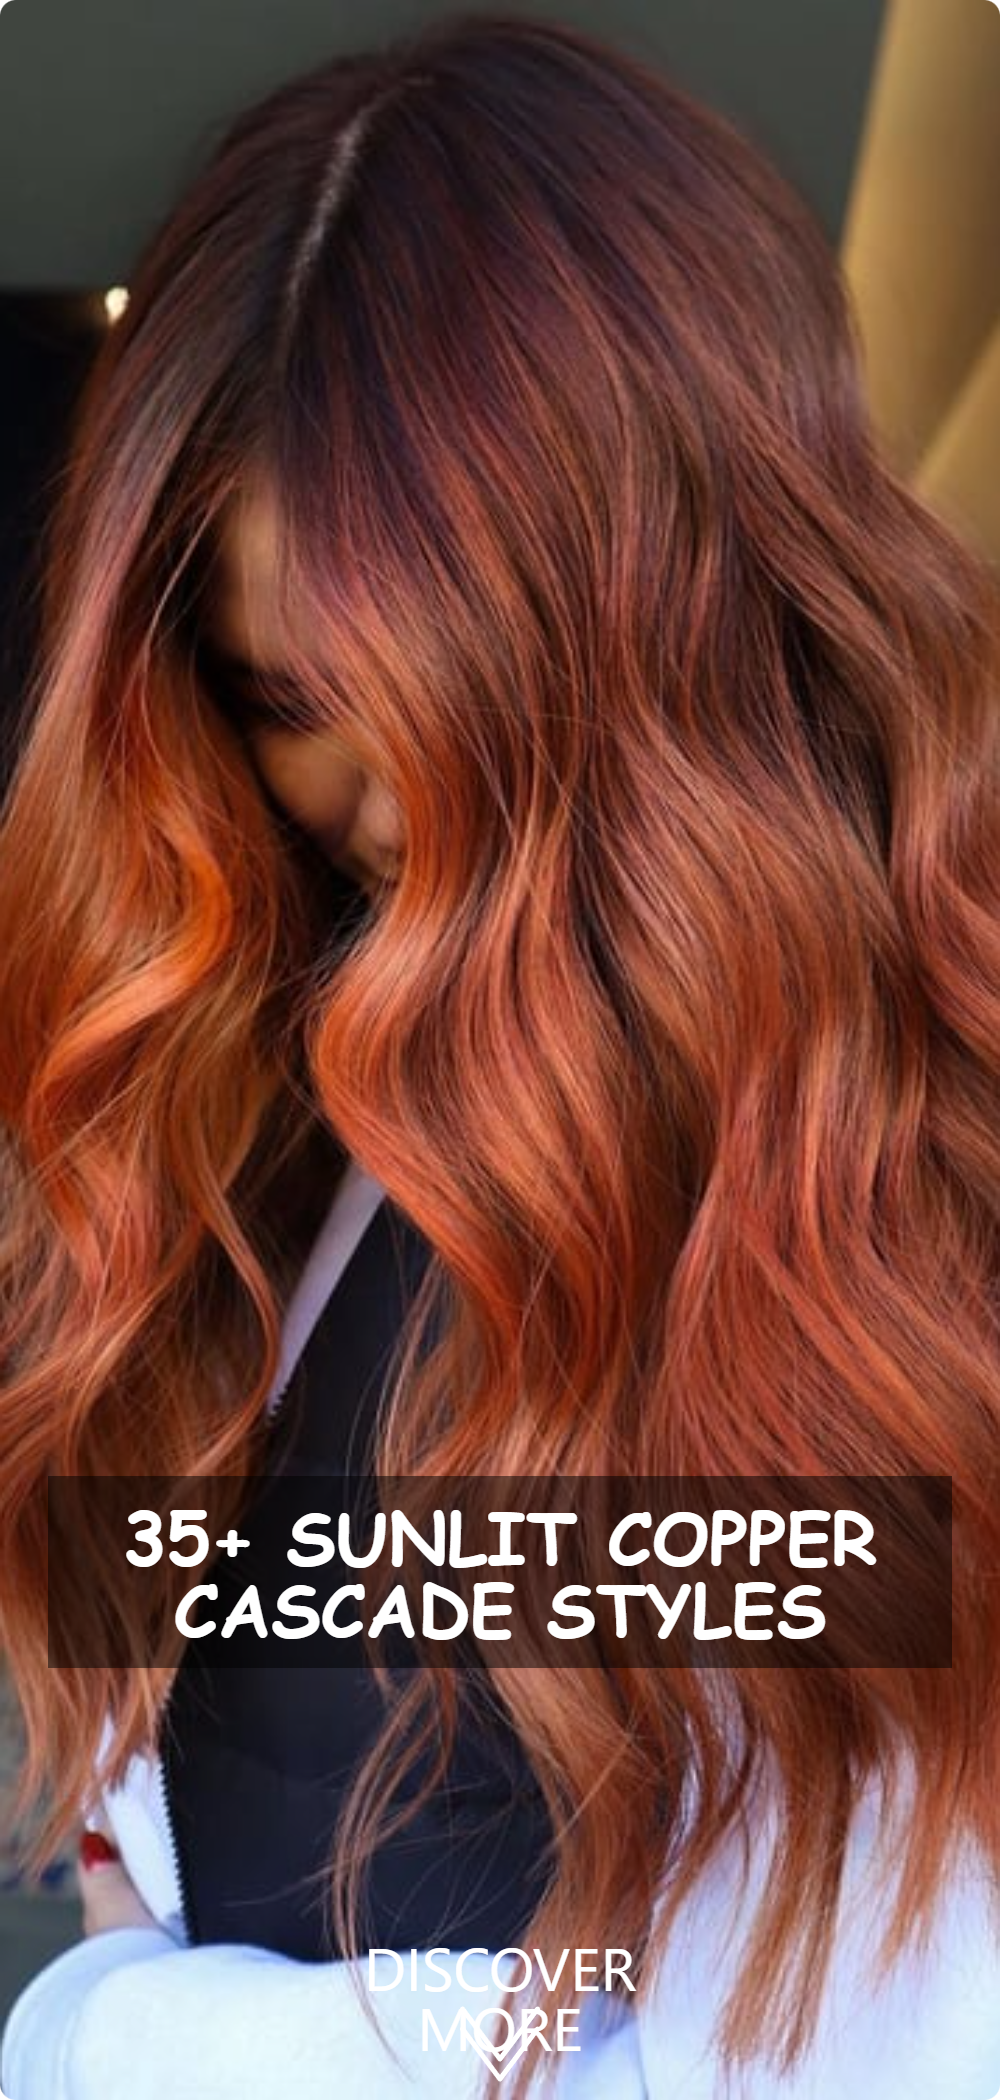 Sunlit Copper Cascade